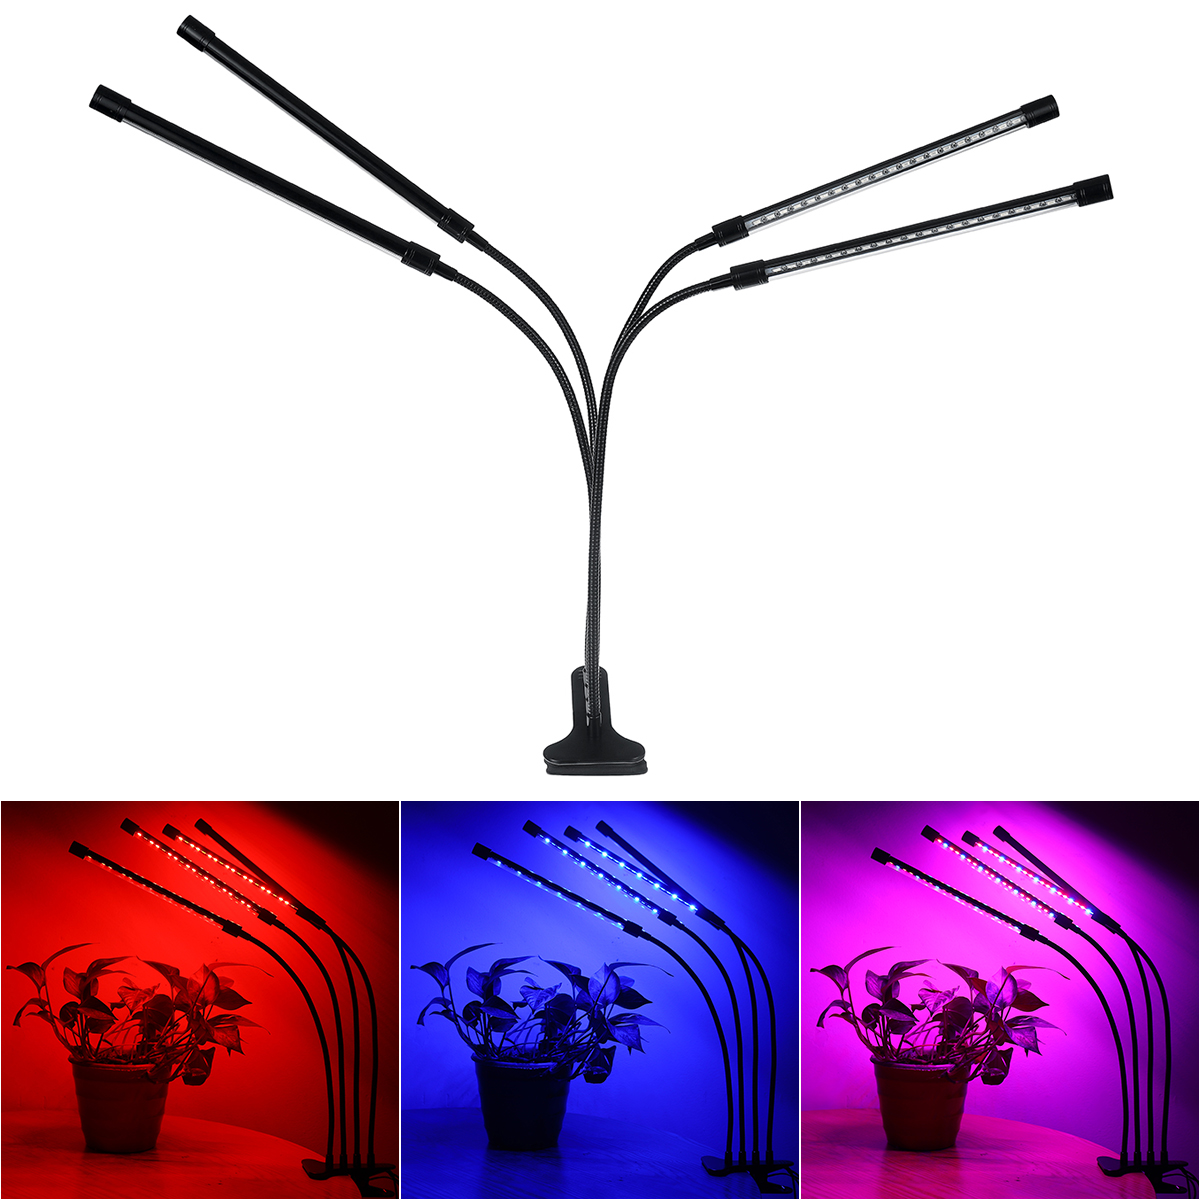 4-Head-40W-Full-Spectrum-LED-Grow-Light-Flexible-Pot-Plant-Flower-Vegetable-Growing-Lamp-with-Timer--1710489-6